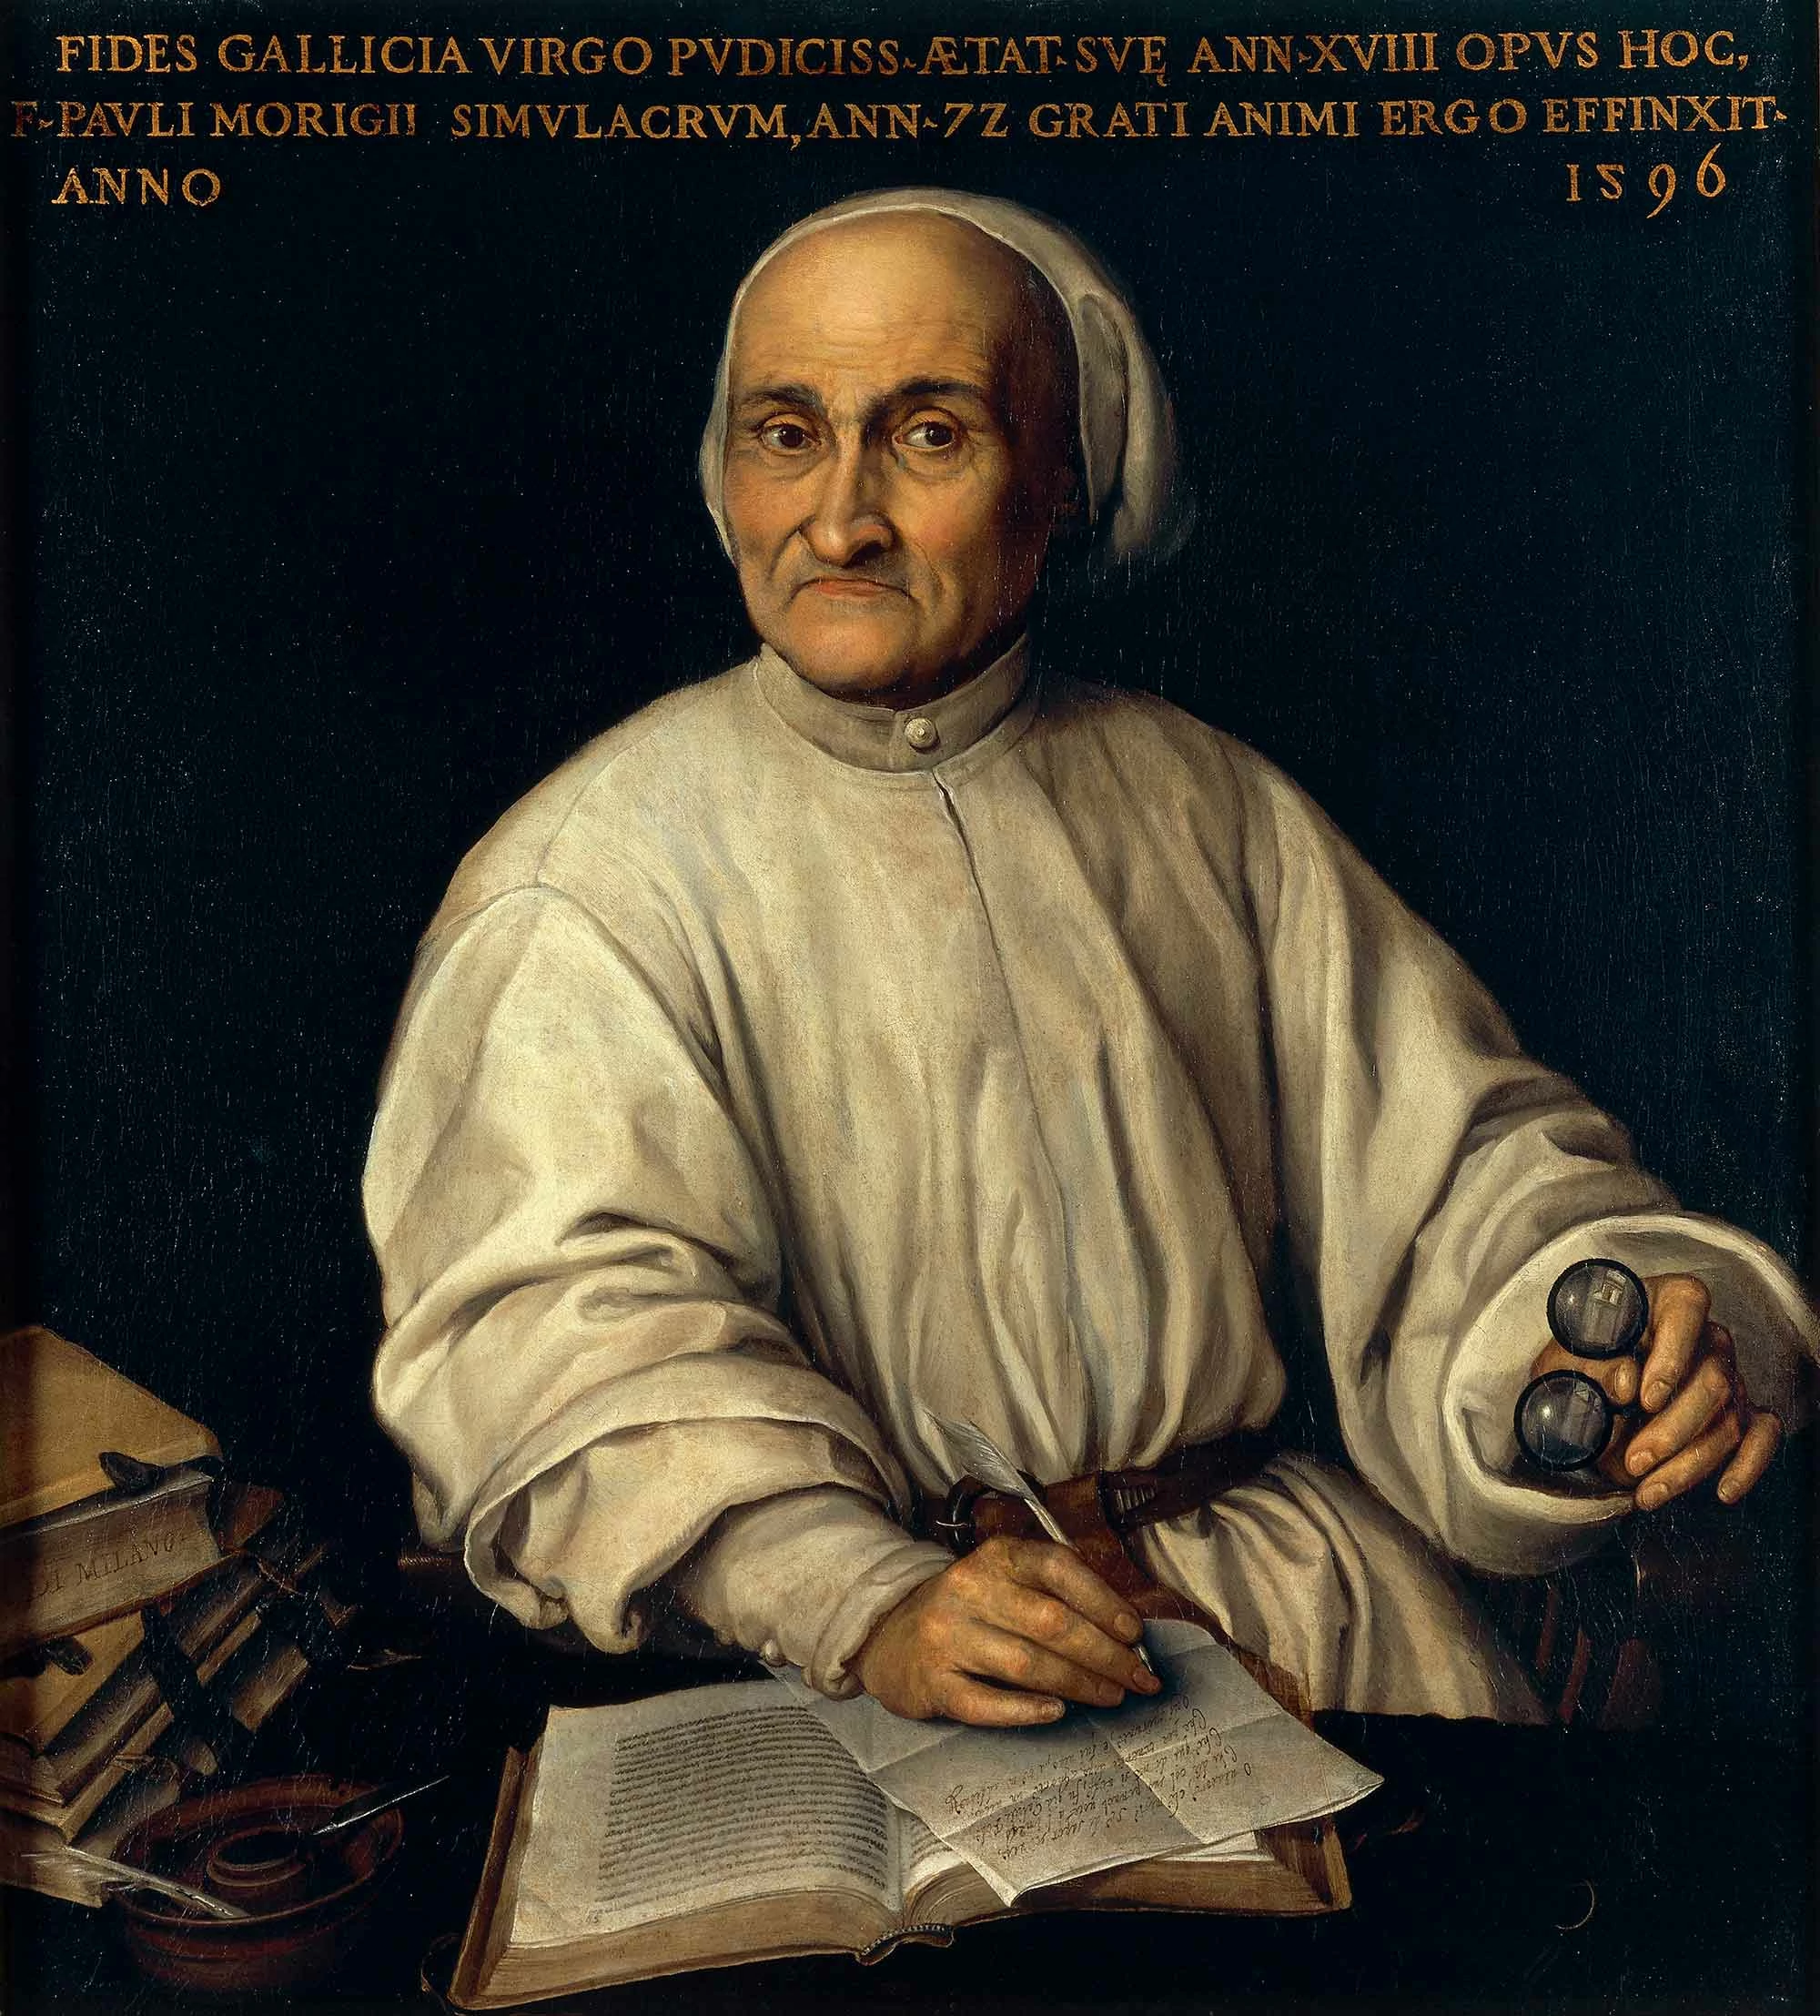 Portrait of Paolo Morigia, Fede Galizia